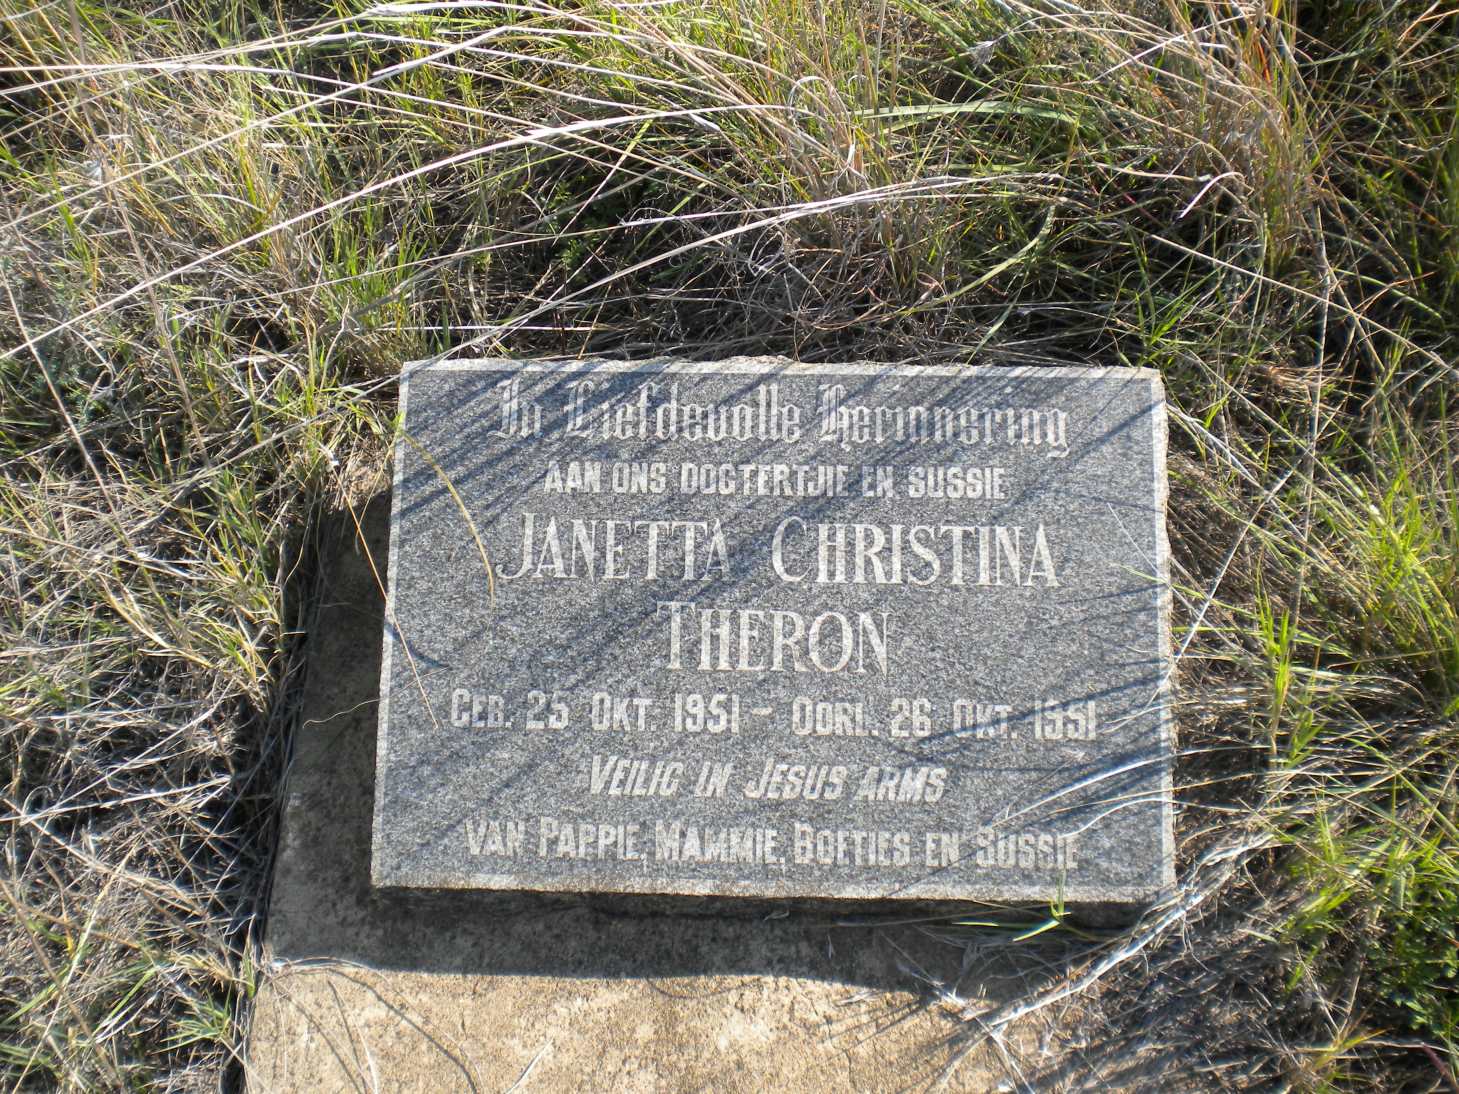 THERON Janetta Christina 1951-1951